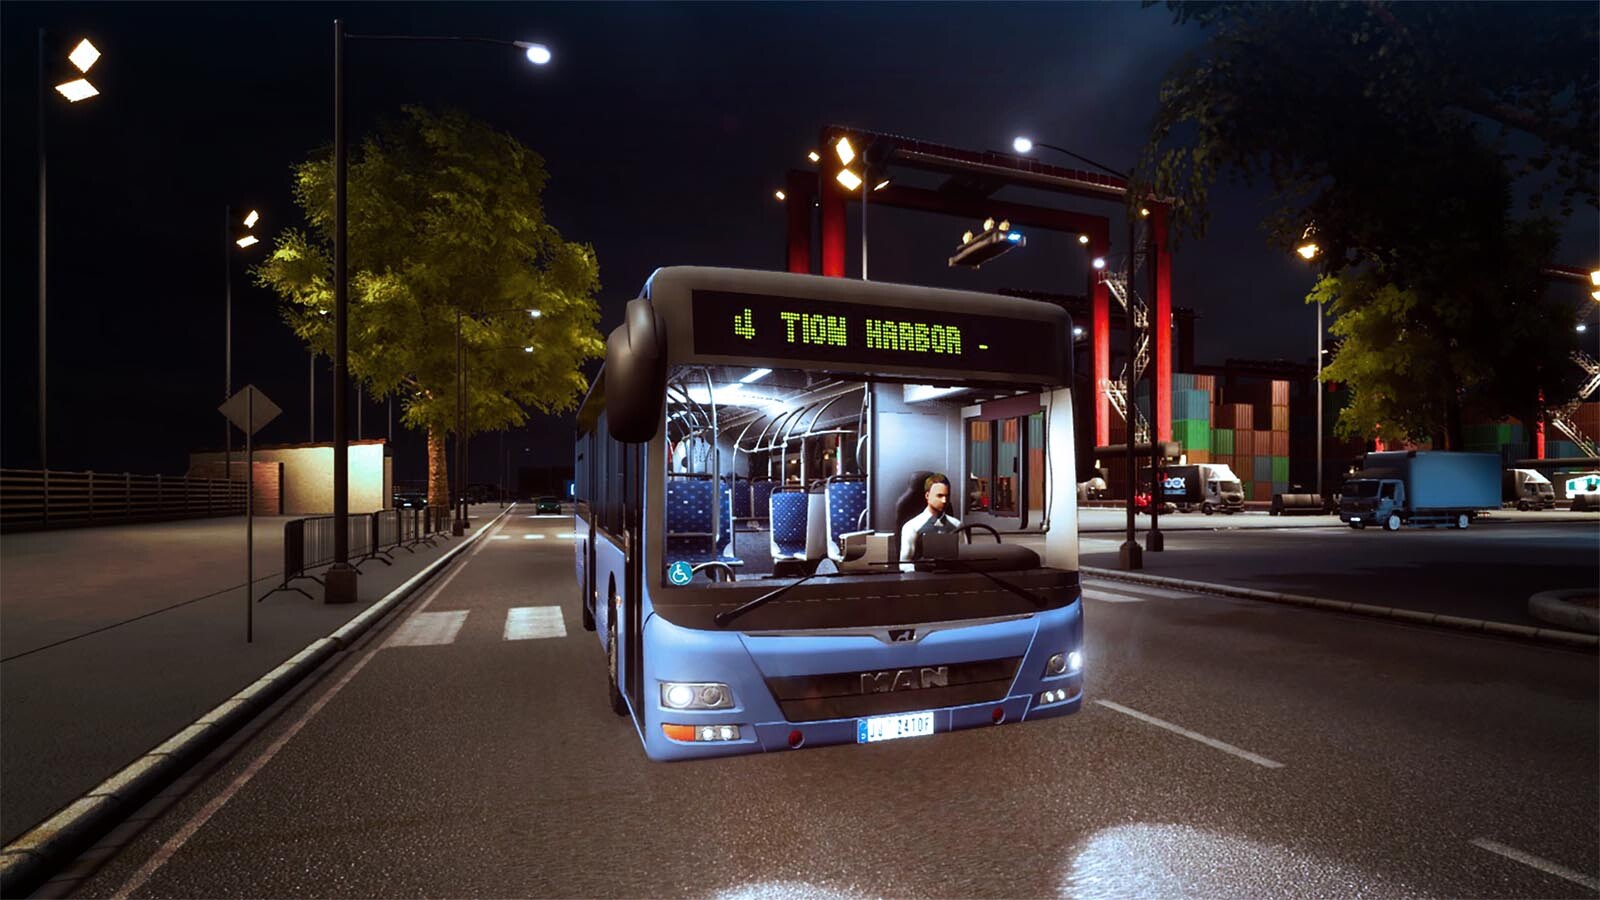 start a bus in bus simulator 18